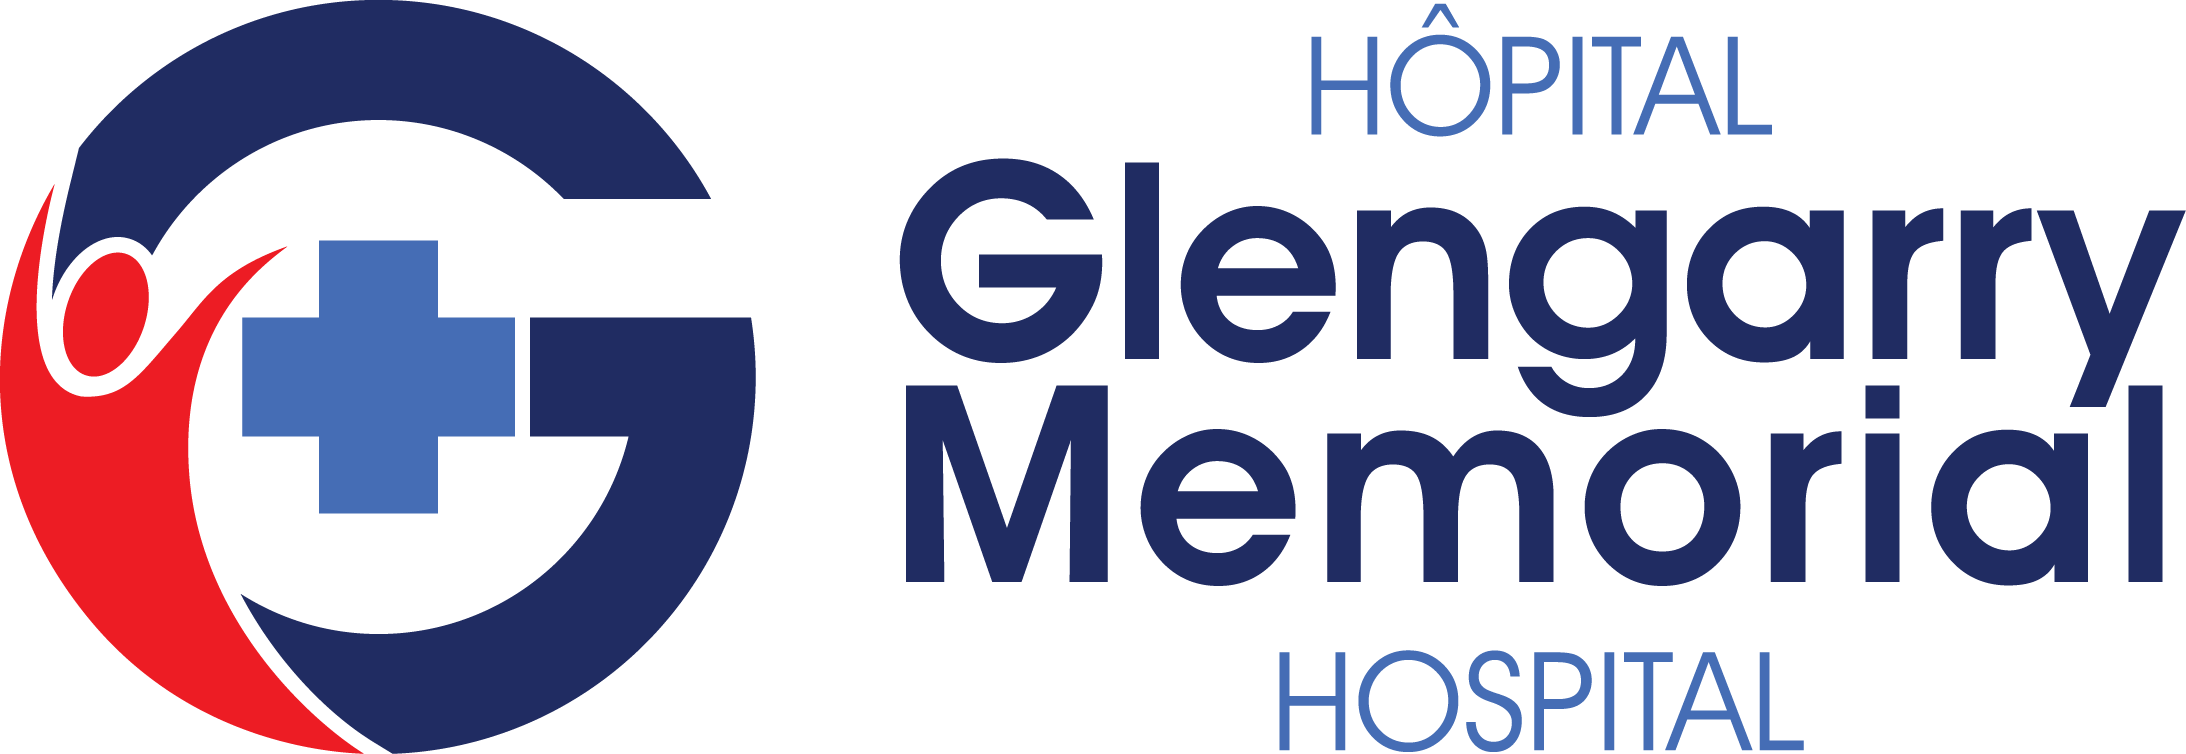 HGMH-logo